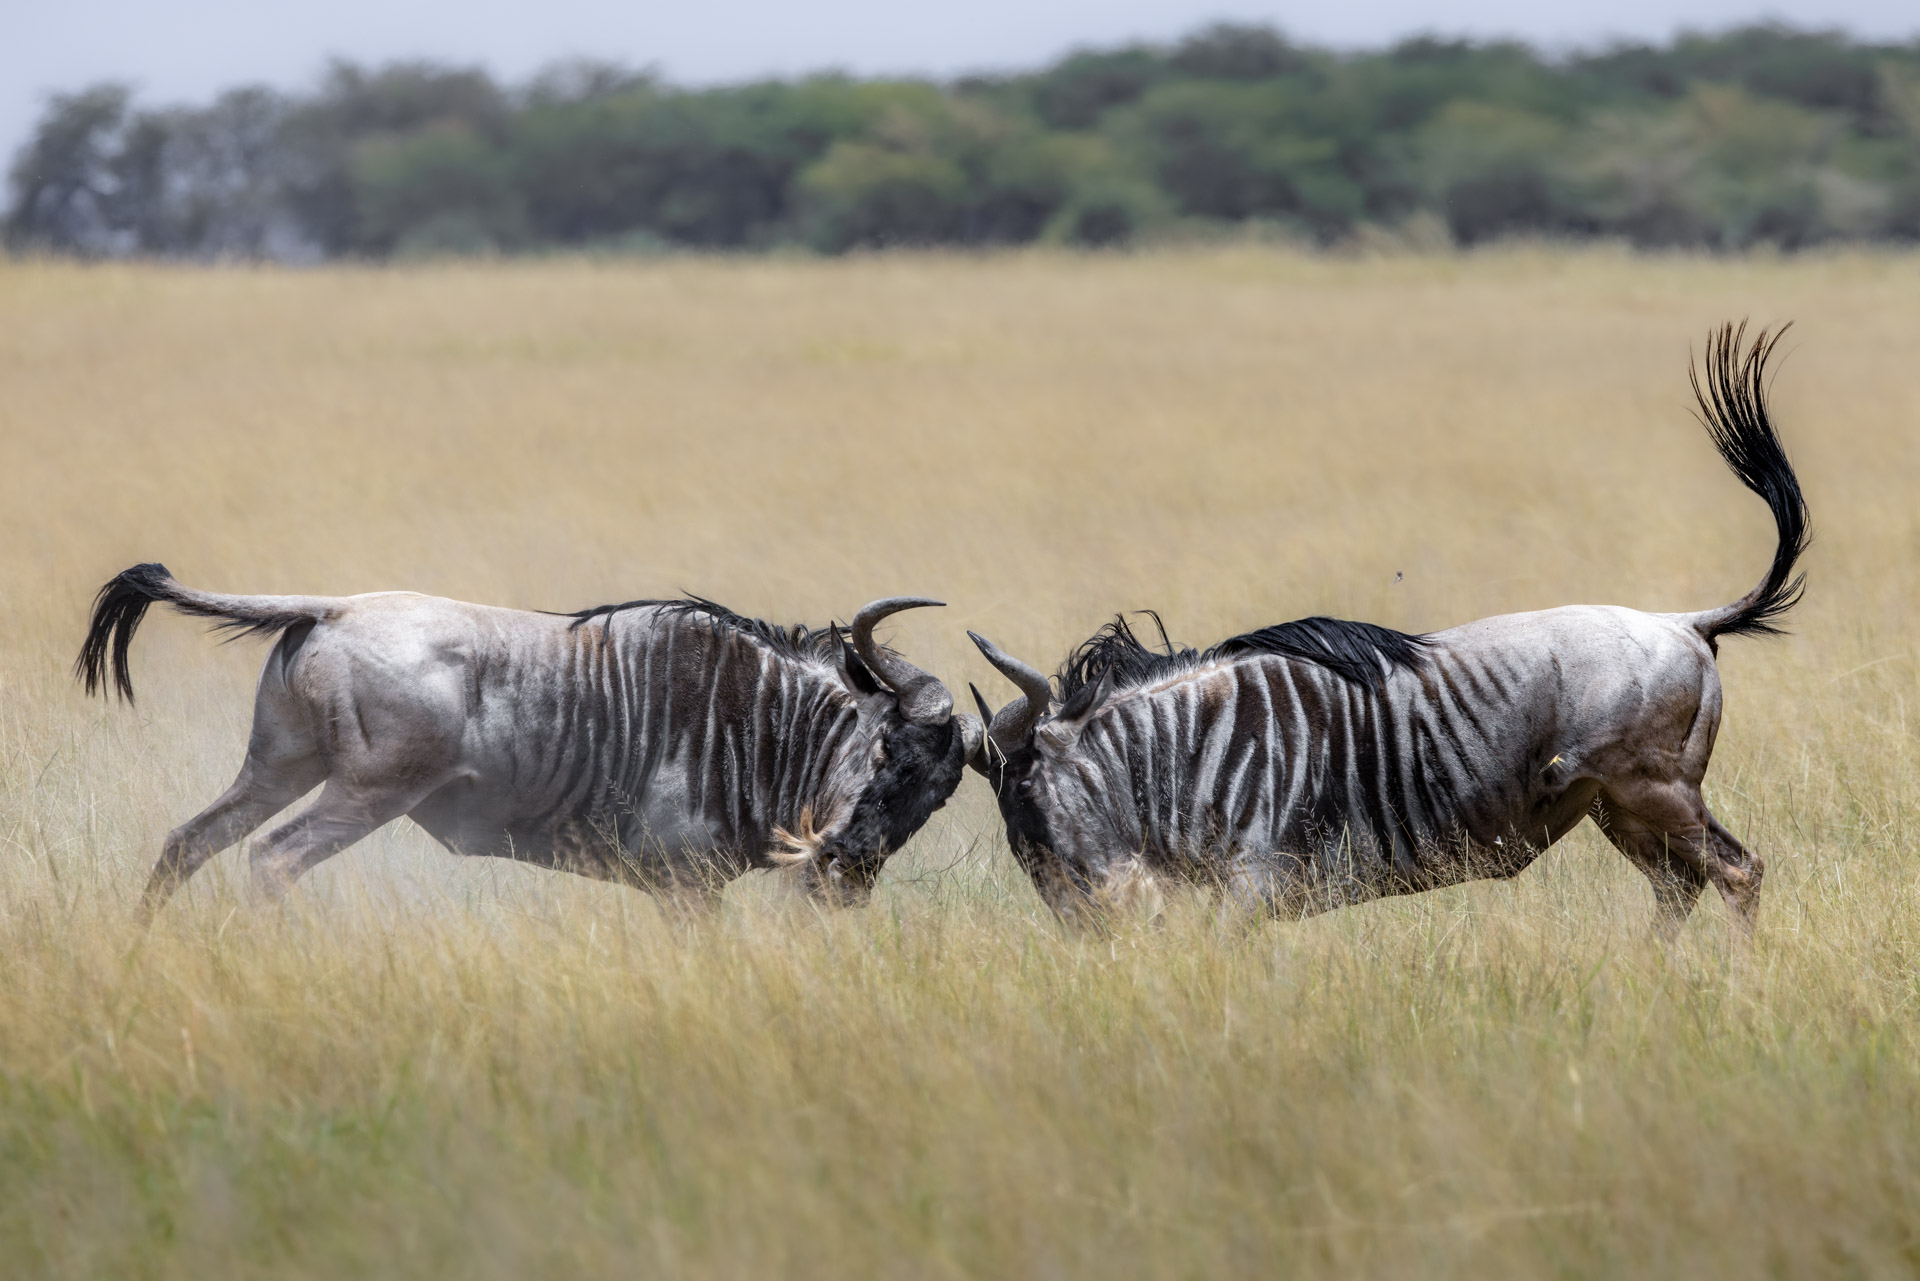 Above: Clash of the wildebeest